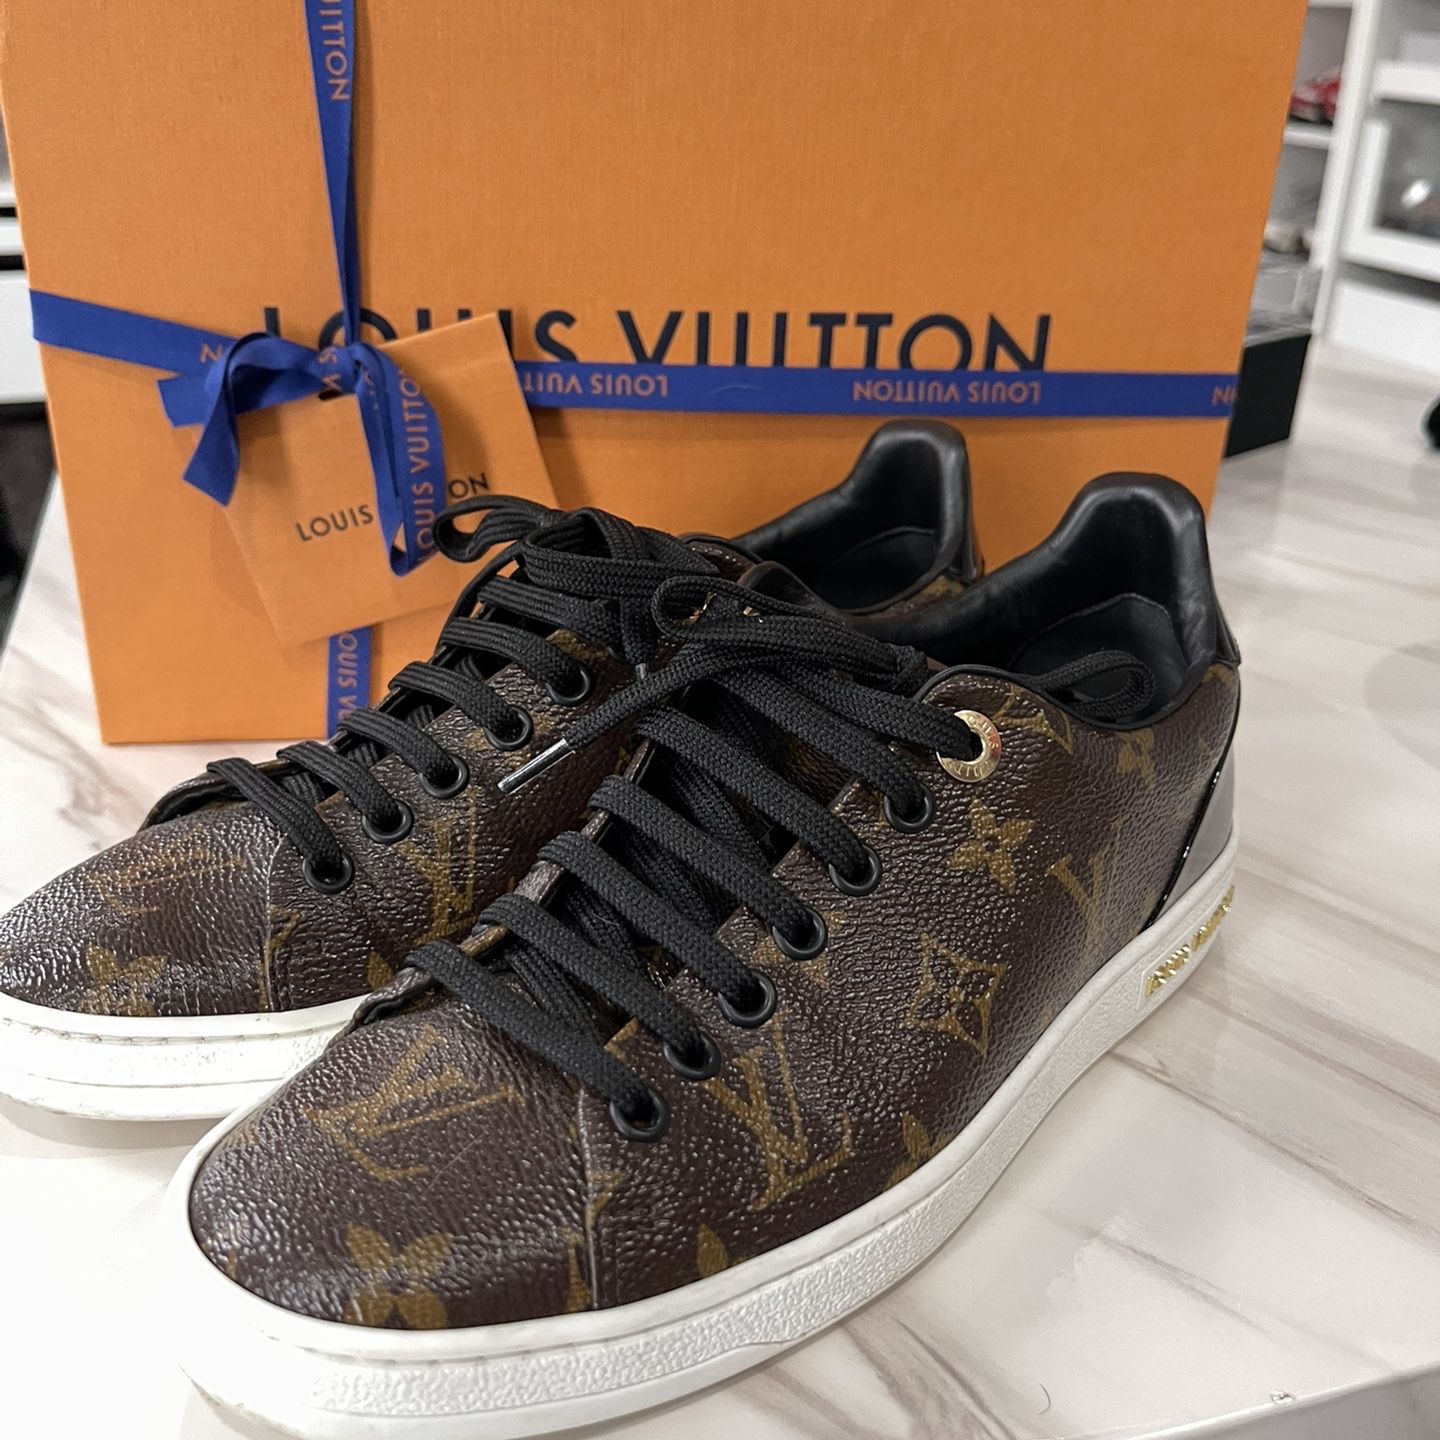 Louis Vuitton Frontrow Sneakers Size 5.5 for Sale in Hillside, NJ